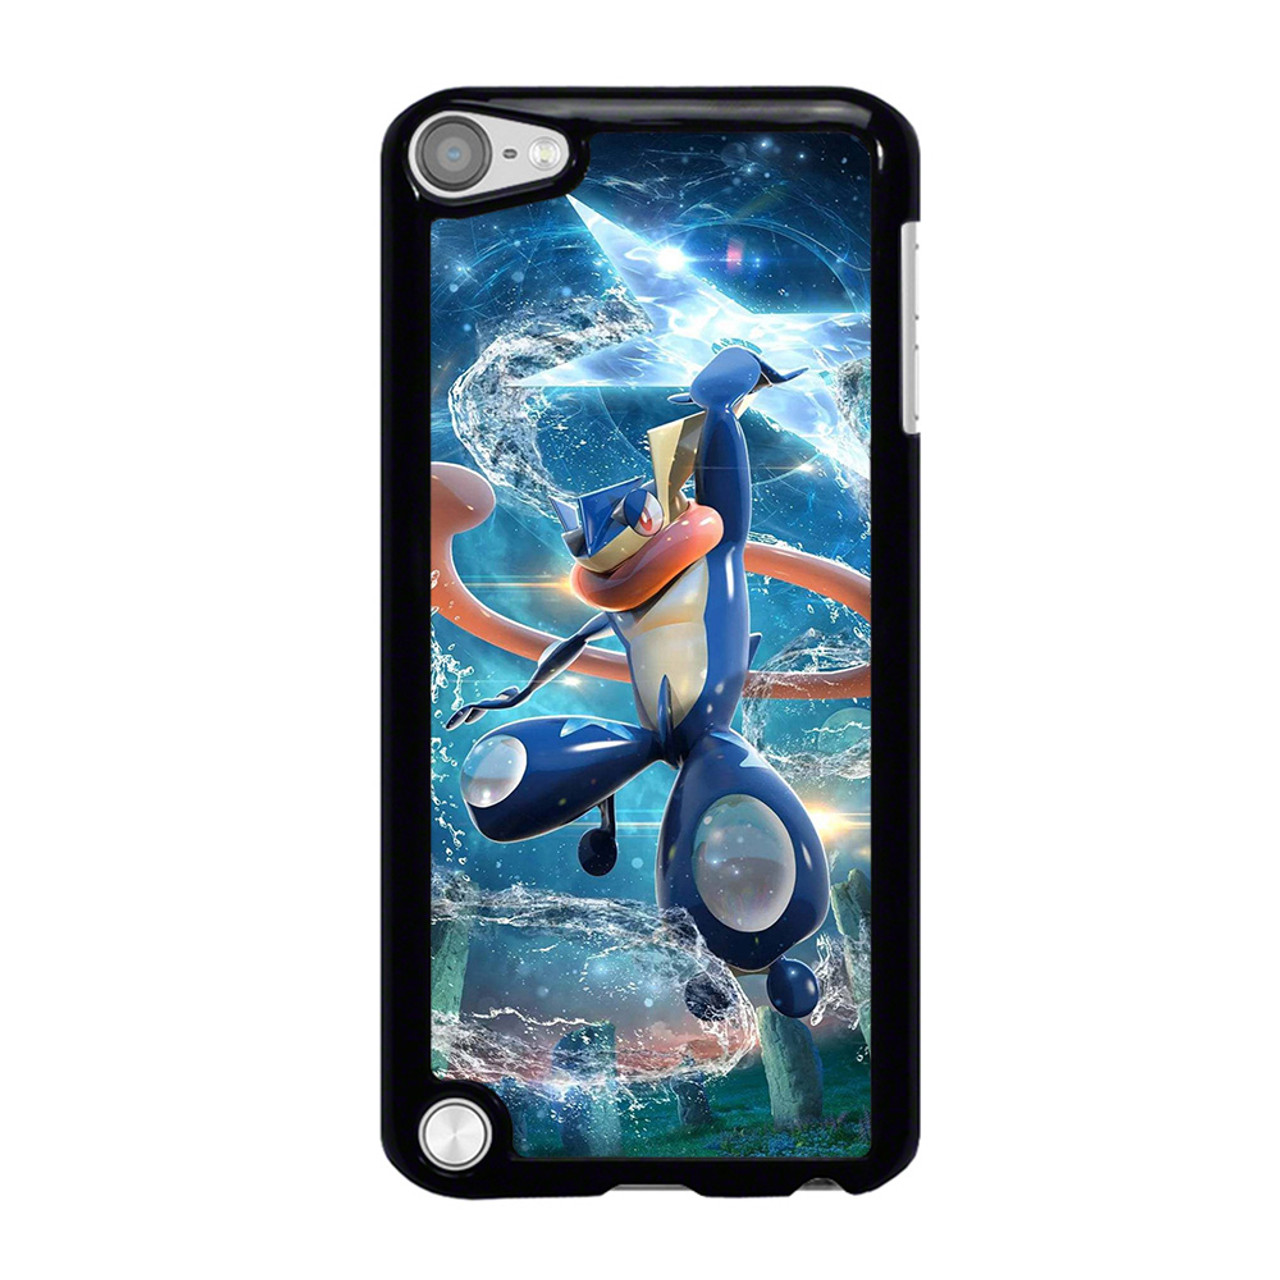 Greninja Pokemon Go Ipod Touch 5 Case Cover